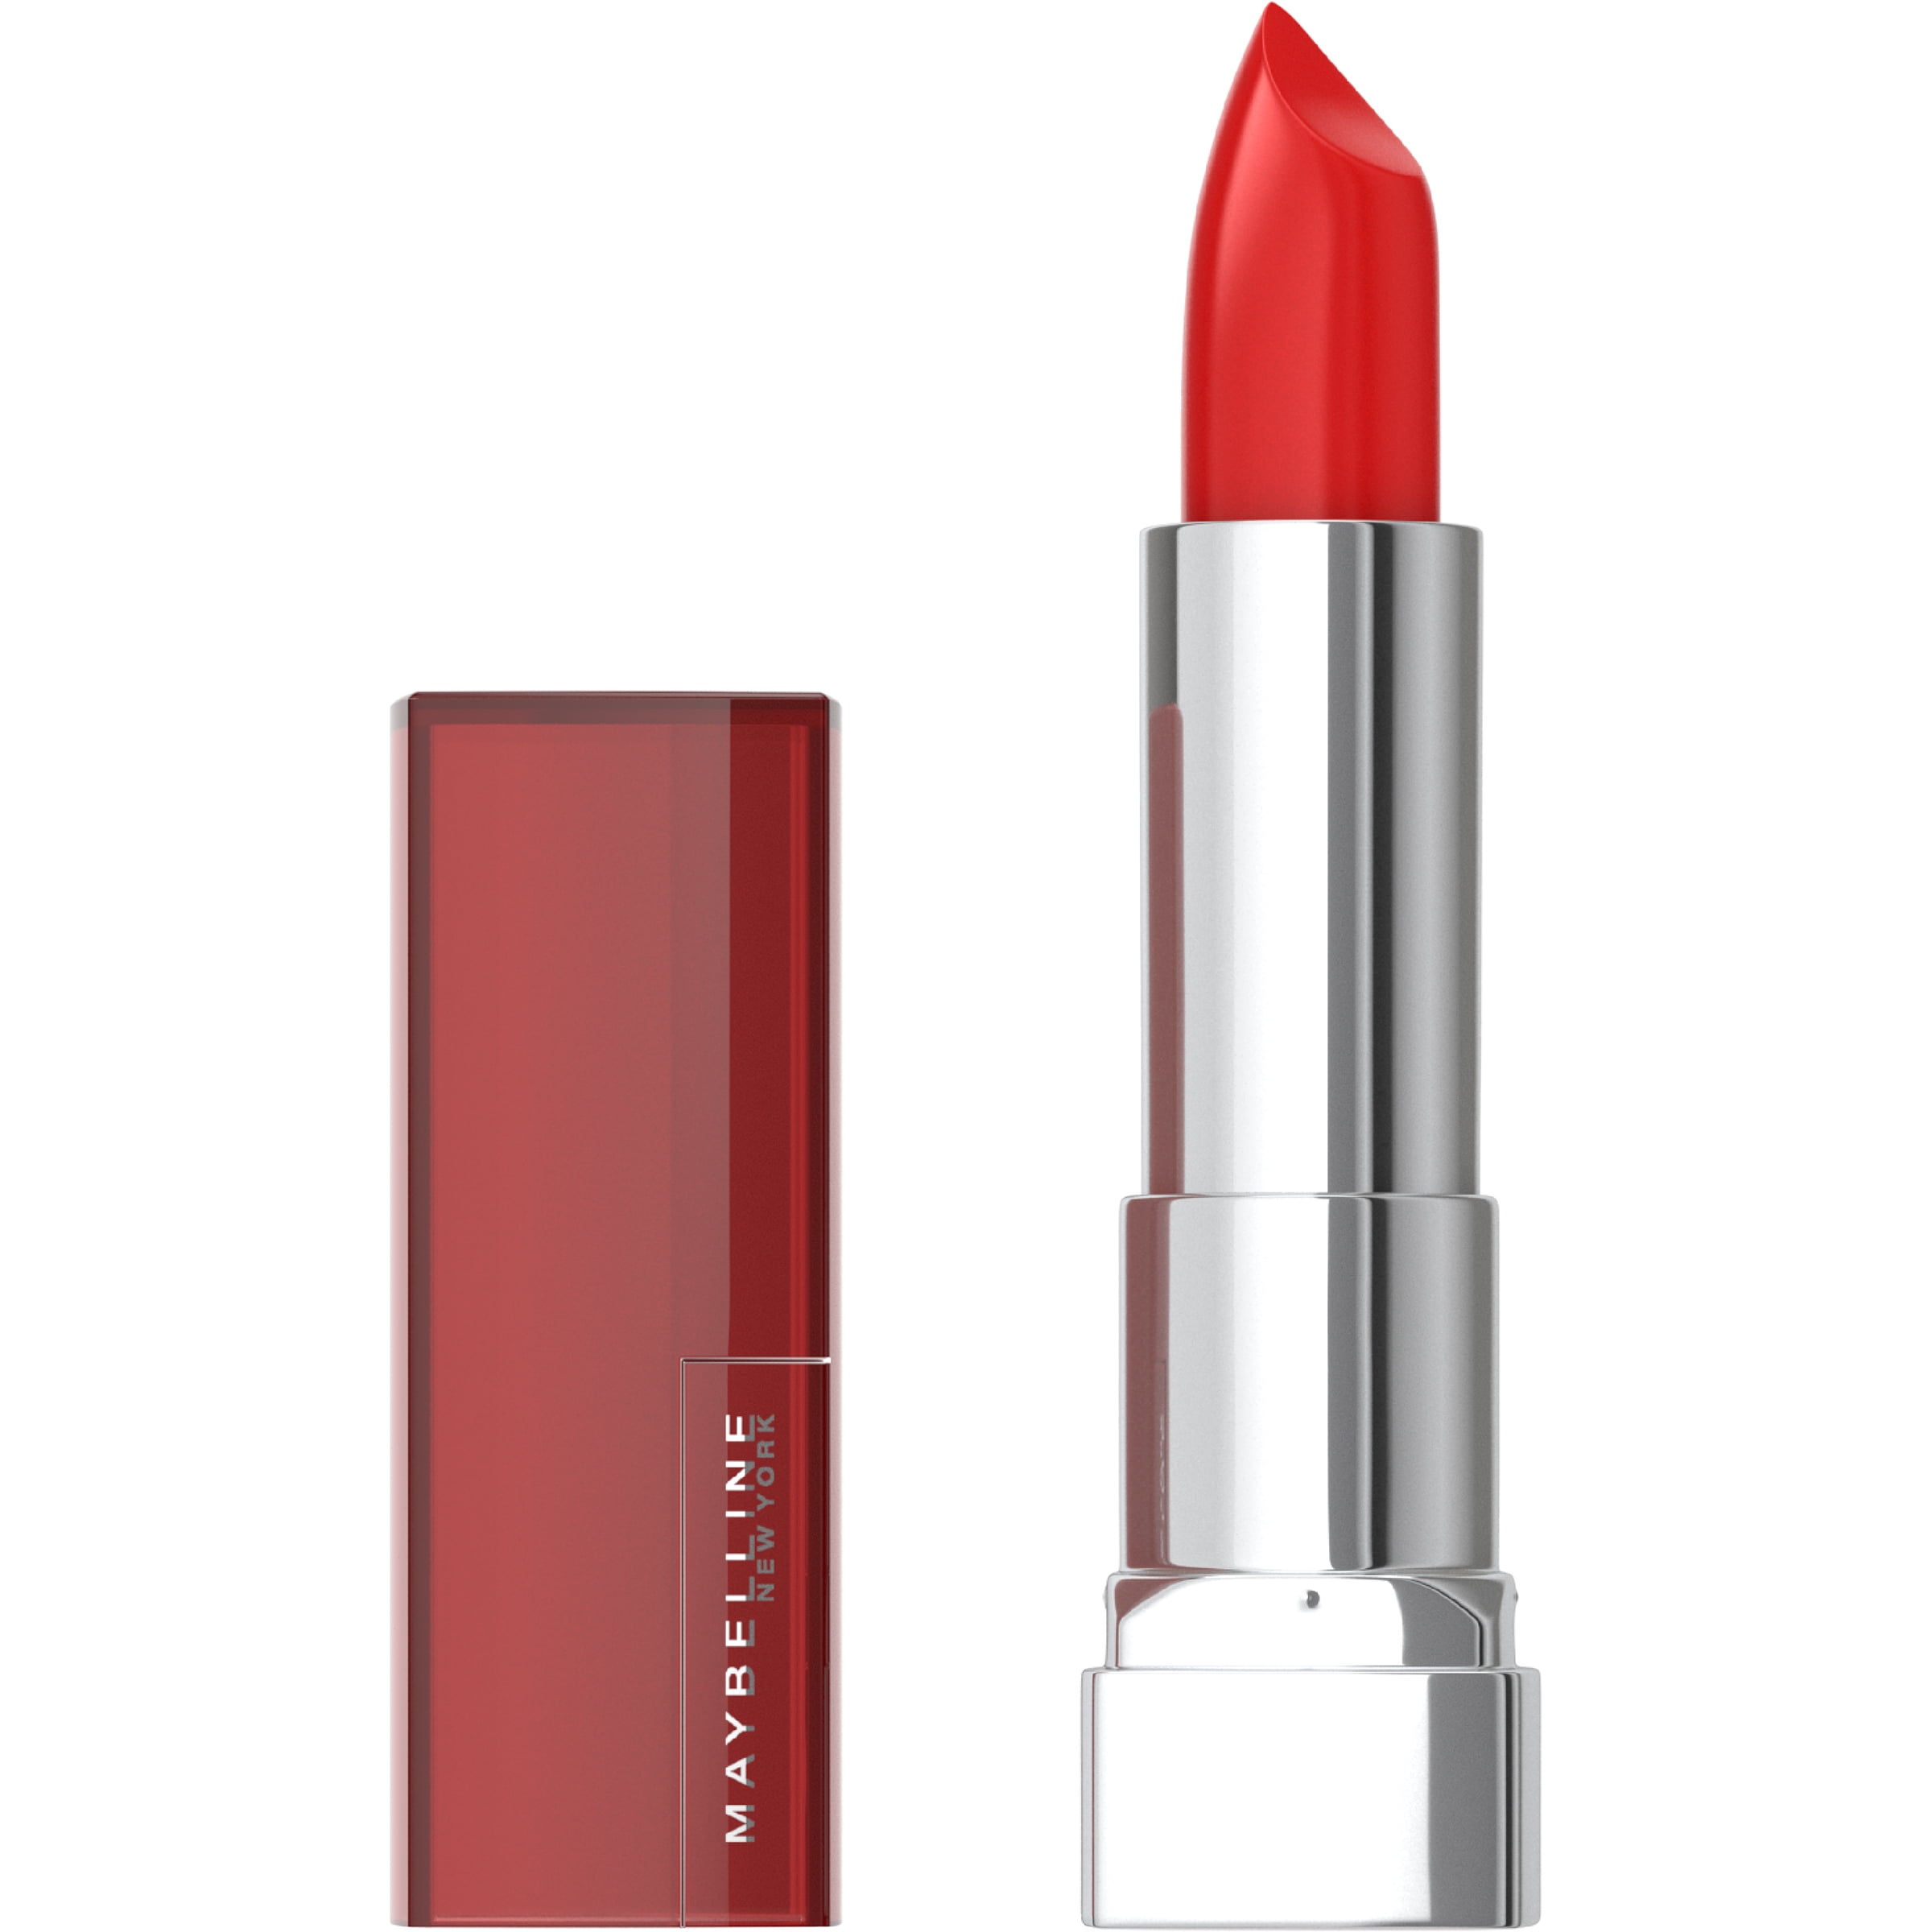 Maybelline Color Sensational Cream Finish Lipstick, Red Revival - image 1 of 6